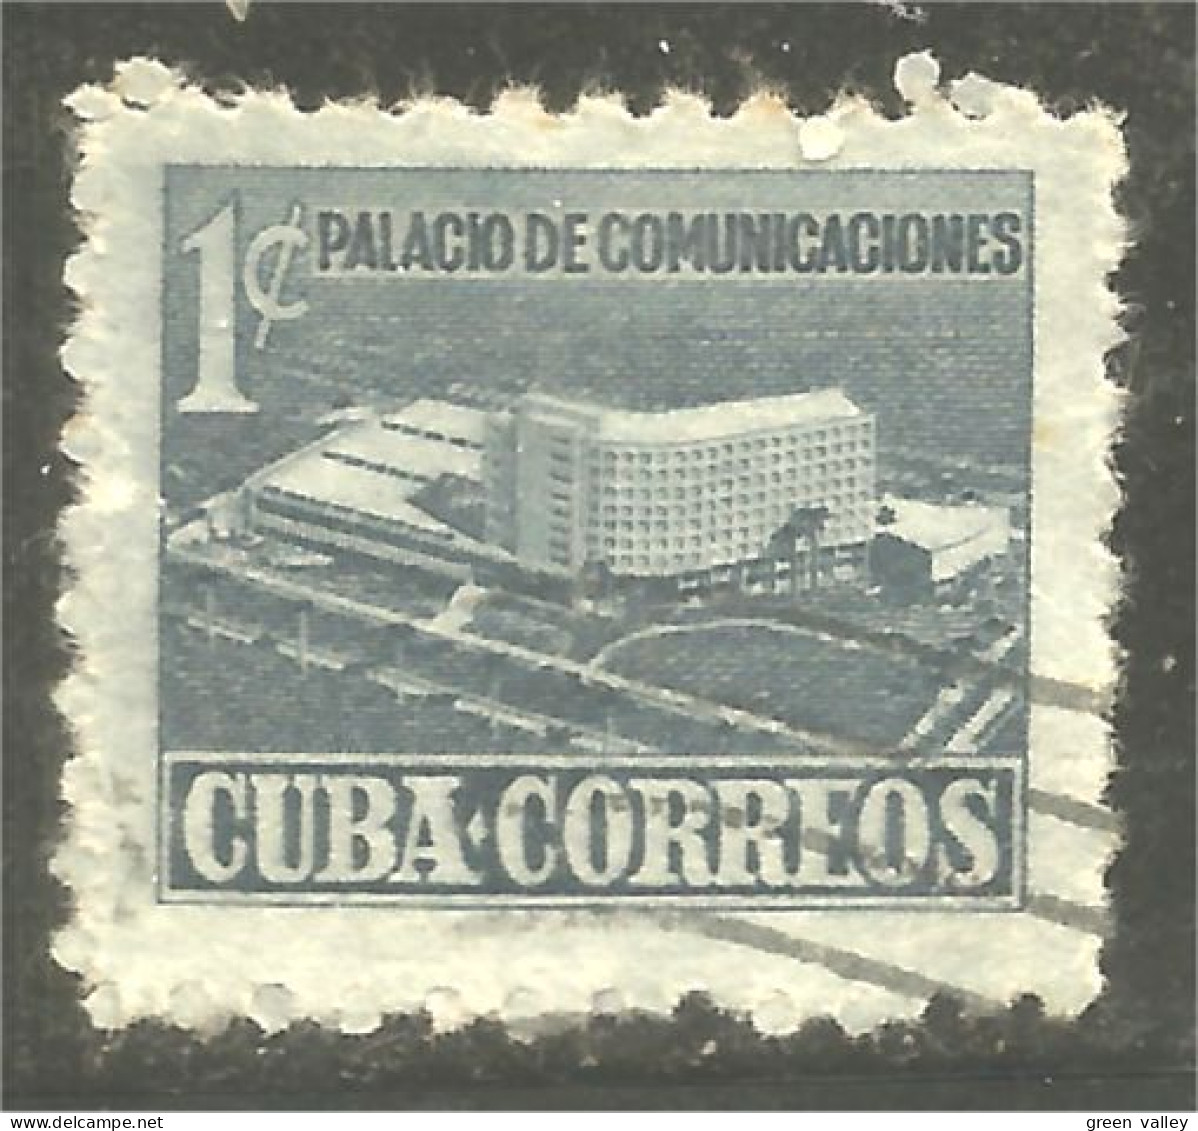 XW01-1982 Cuba Postal Tax Stamp 1952 1c Blue Bleu - Charity Issues